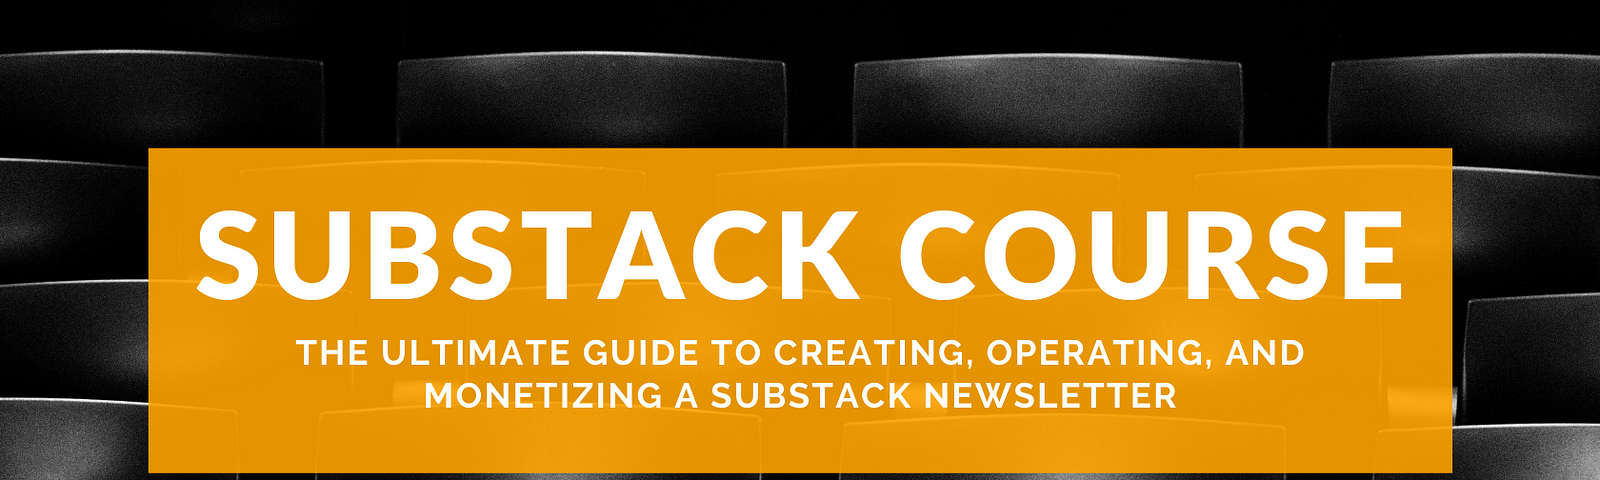 substack course, substack newsletter, substack, substack logo, substack newsletter course, how to start a substack newsletter, creating a substack newsletter